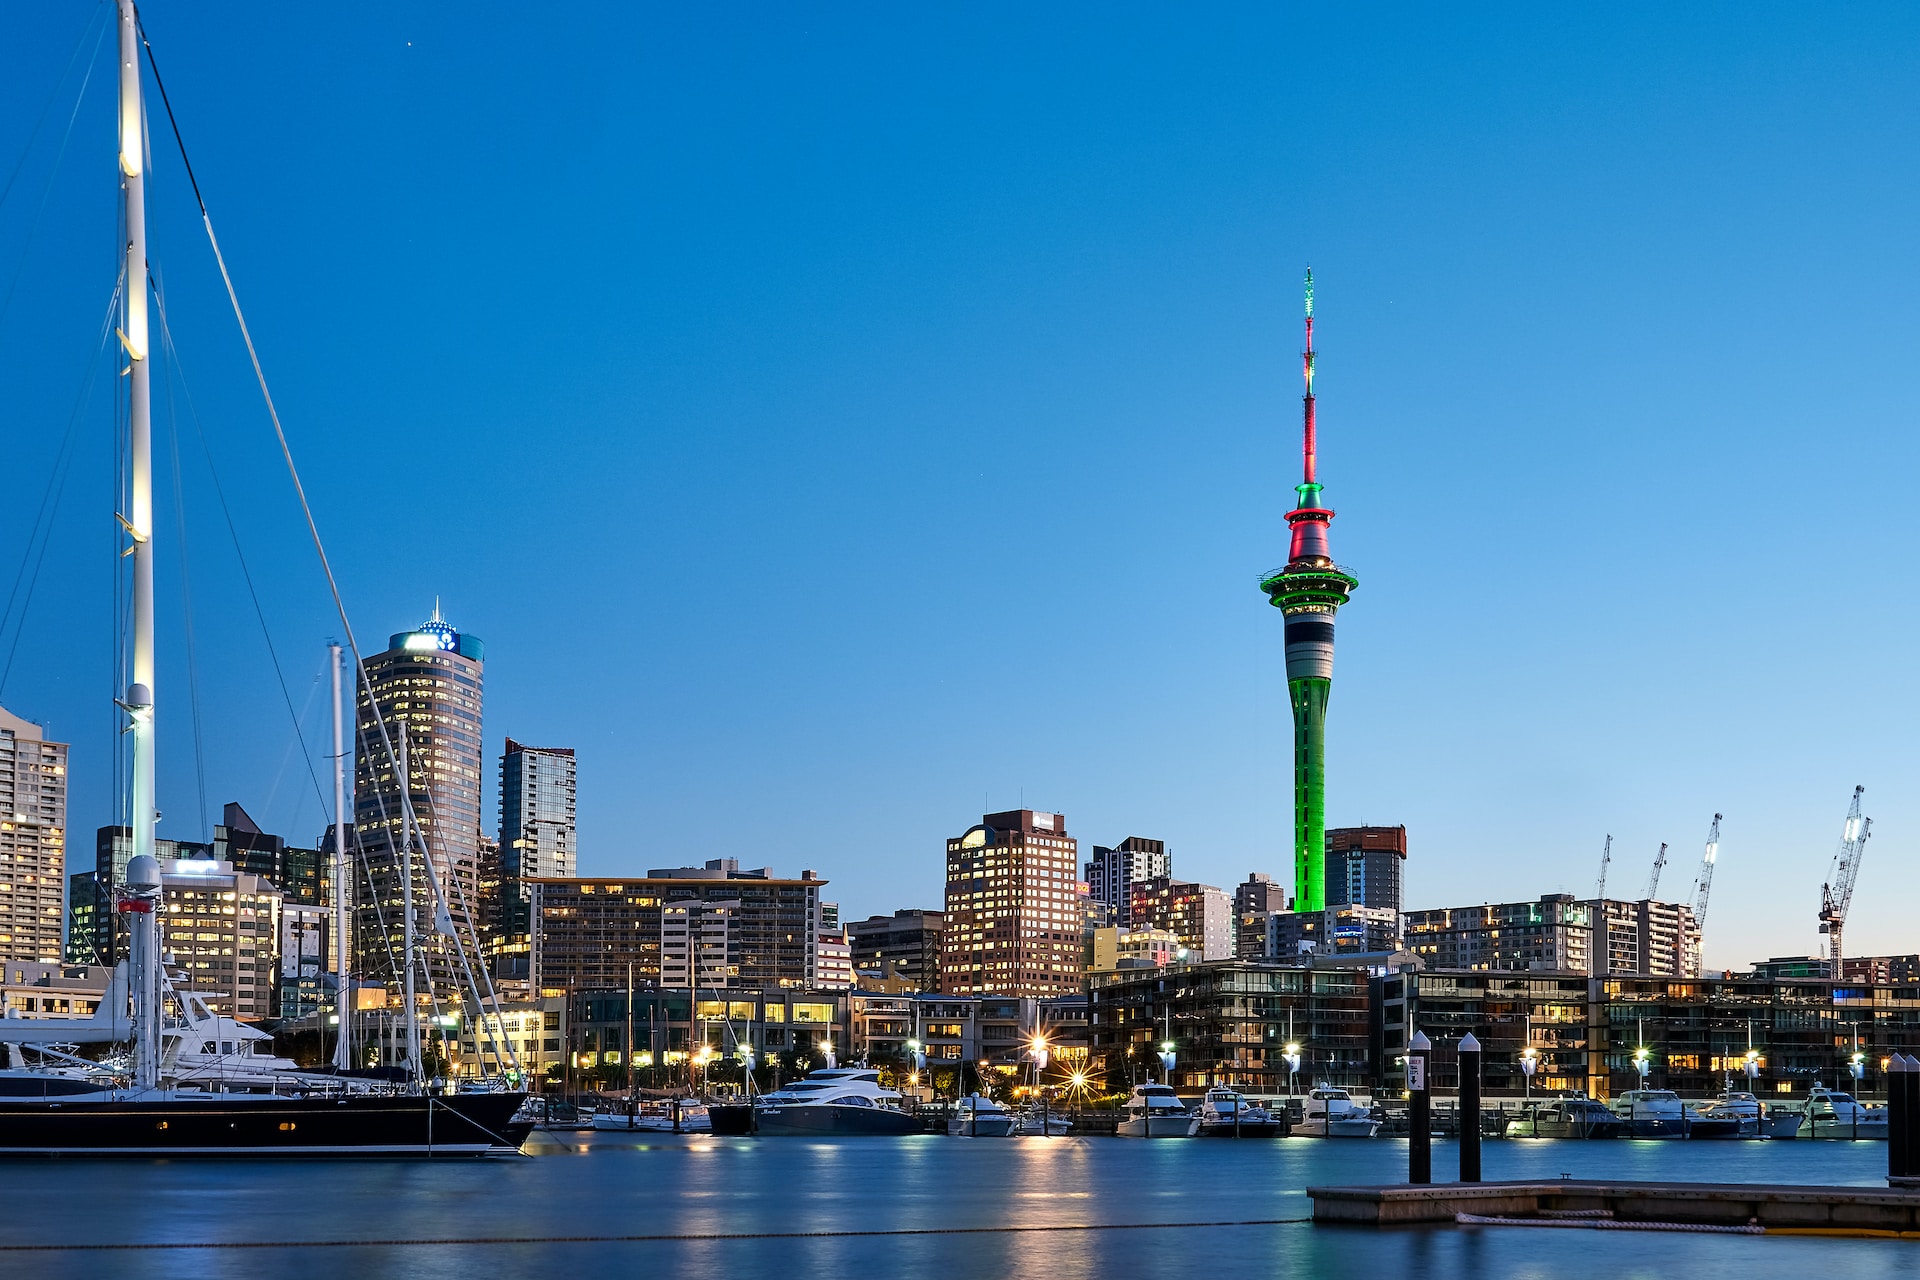 New Zealand's property market decline